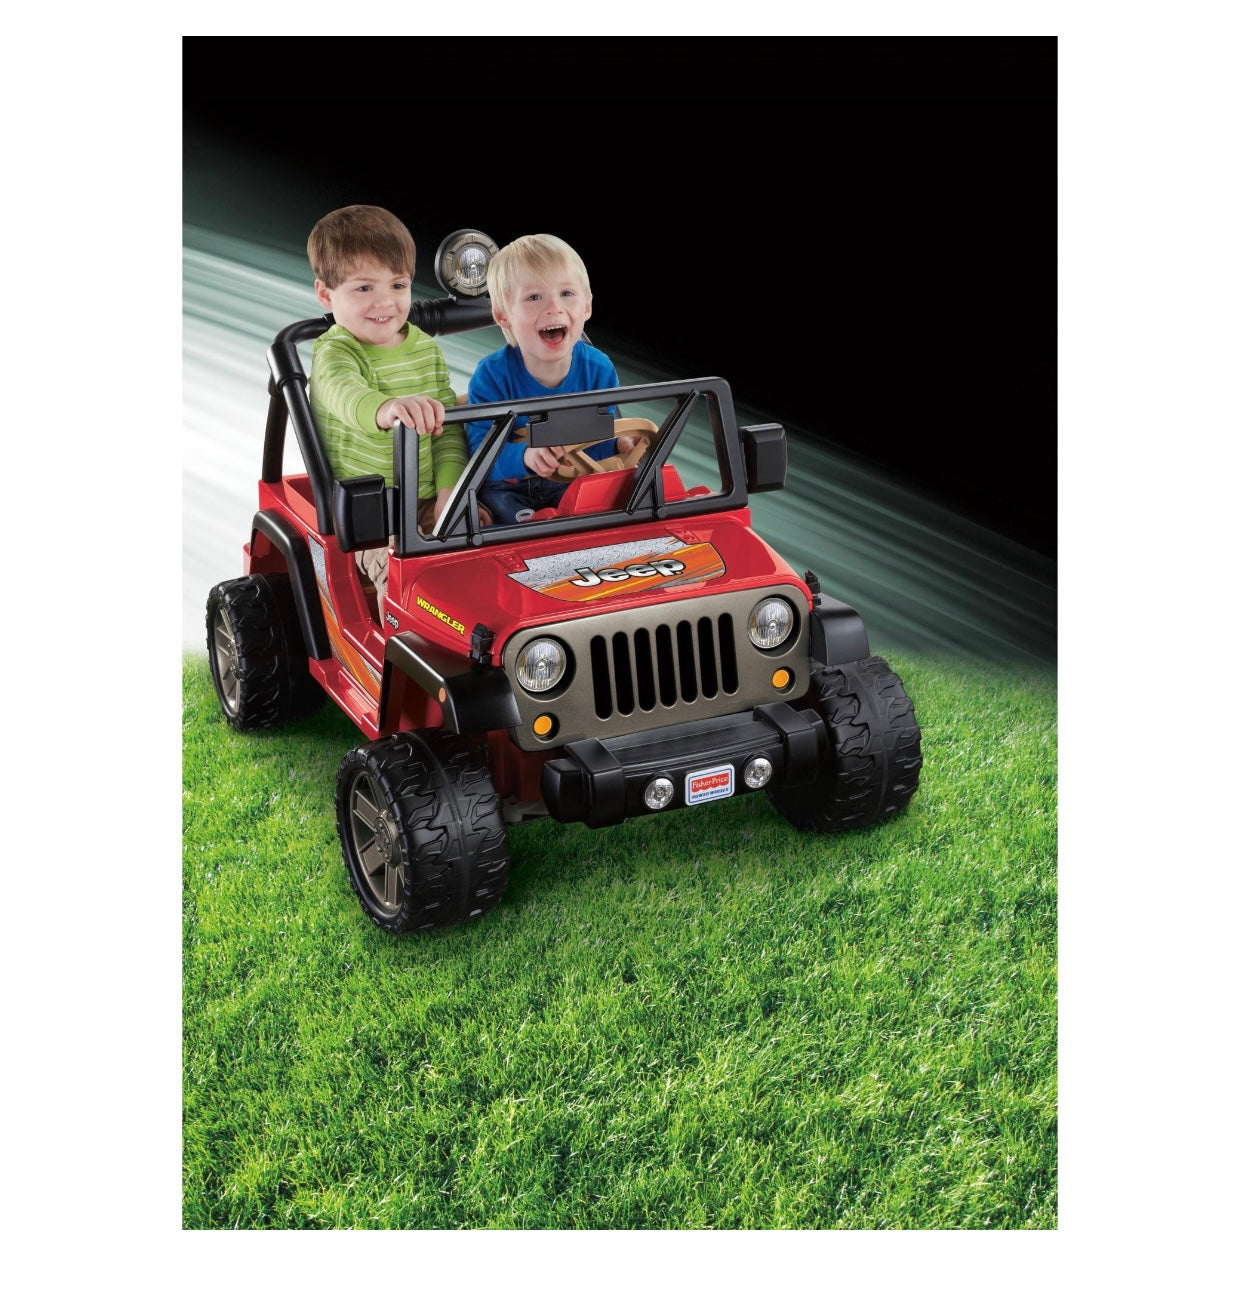 Power Wheels Jeep Wrangler 12V Red and Black Ride On Vehicle – El Mercado  de Juguetes